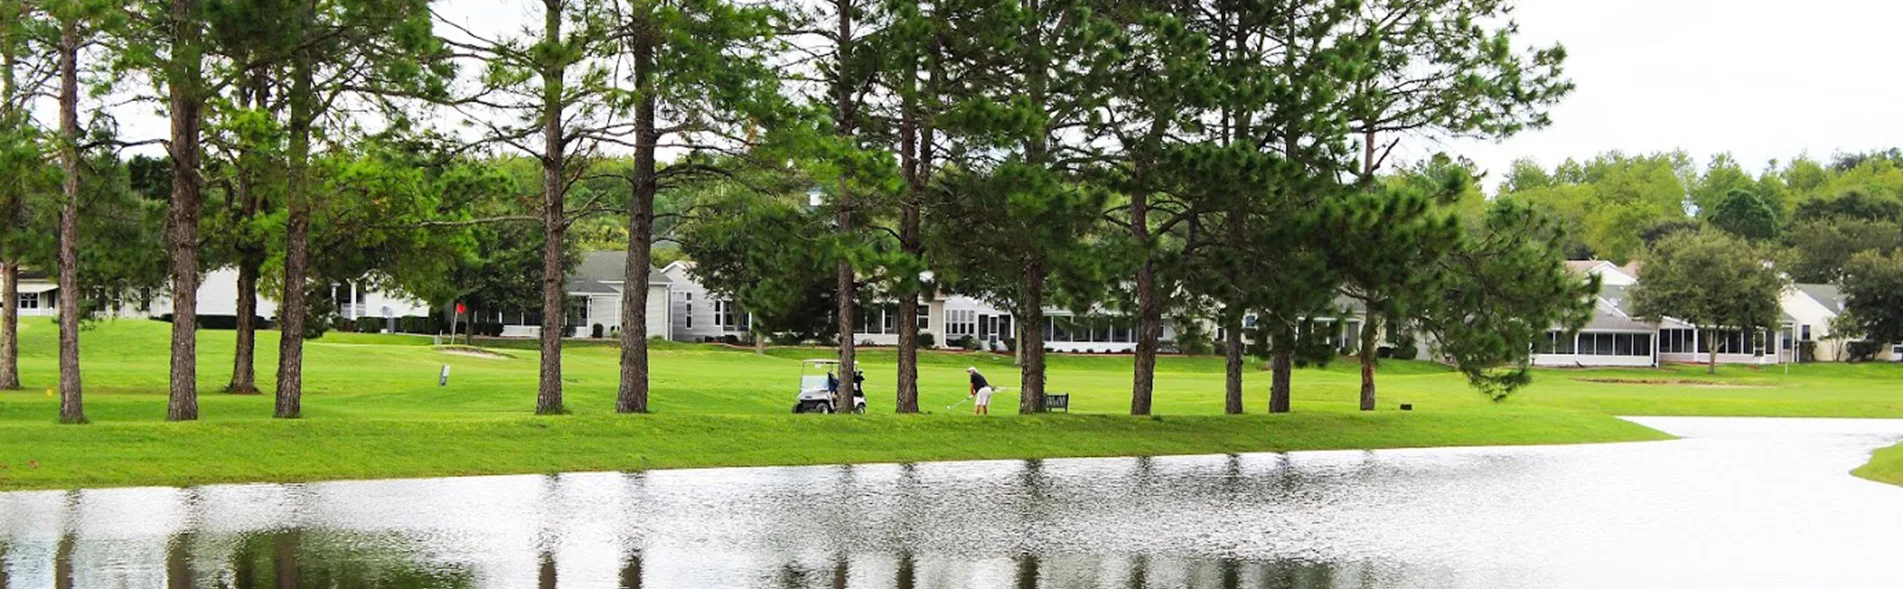 Scotland Yards Golf Club Florida United States Of America jpg